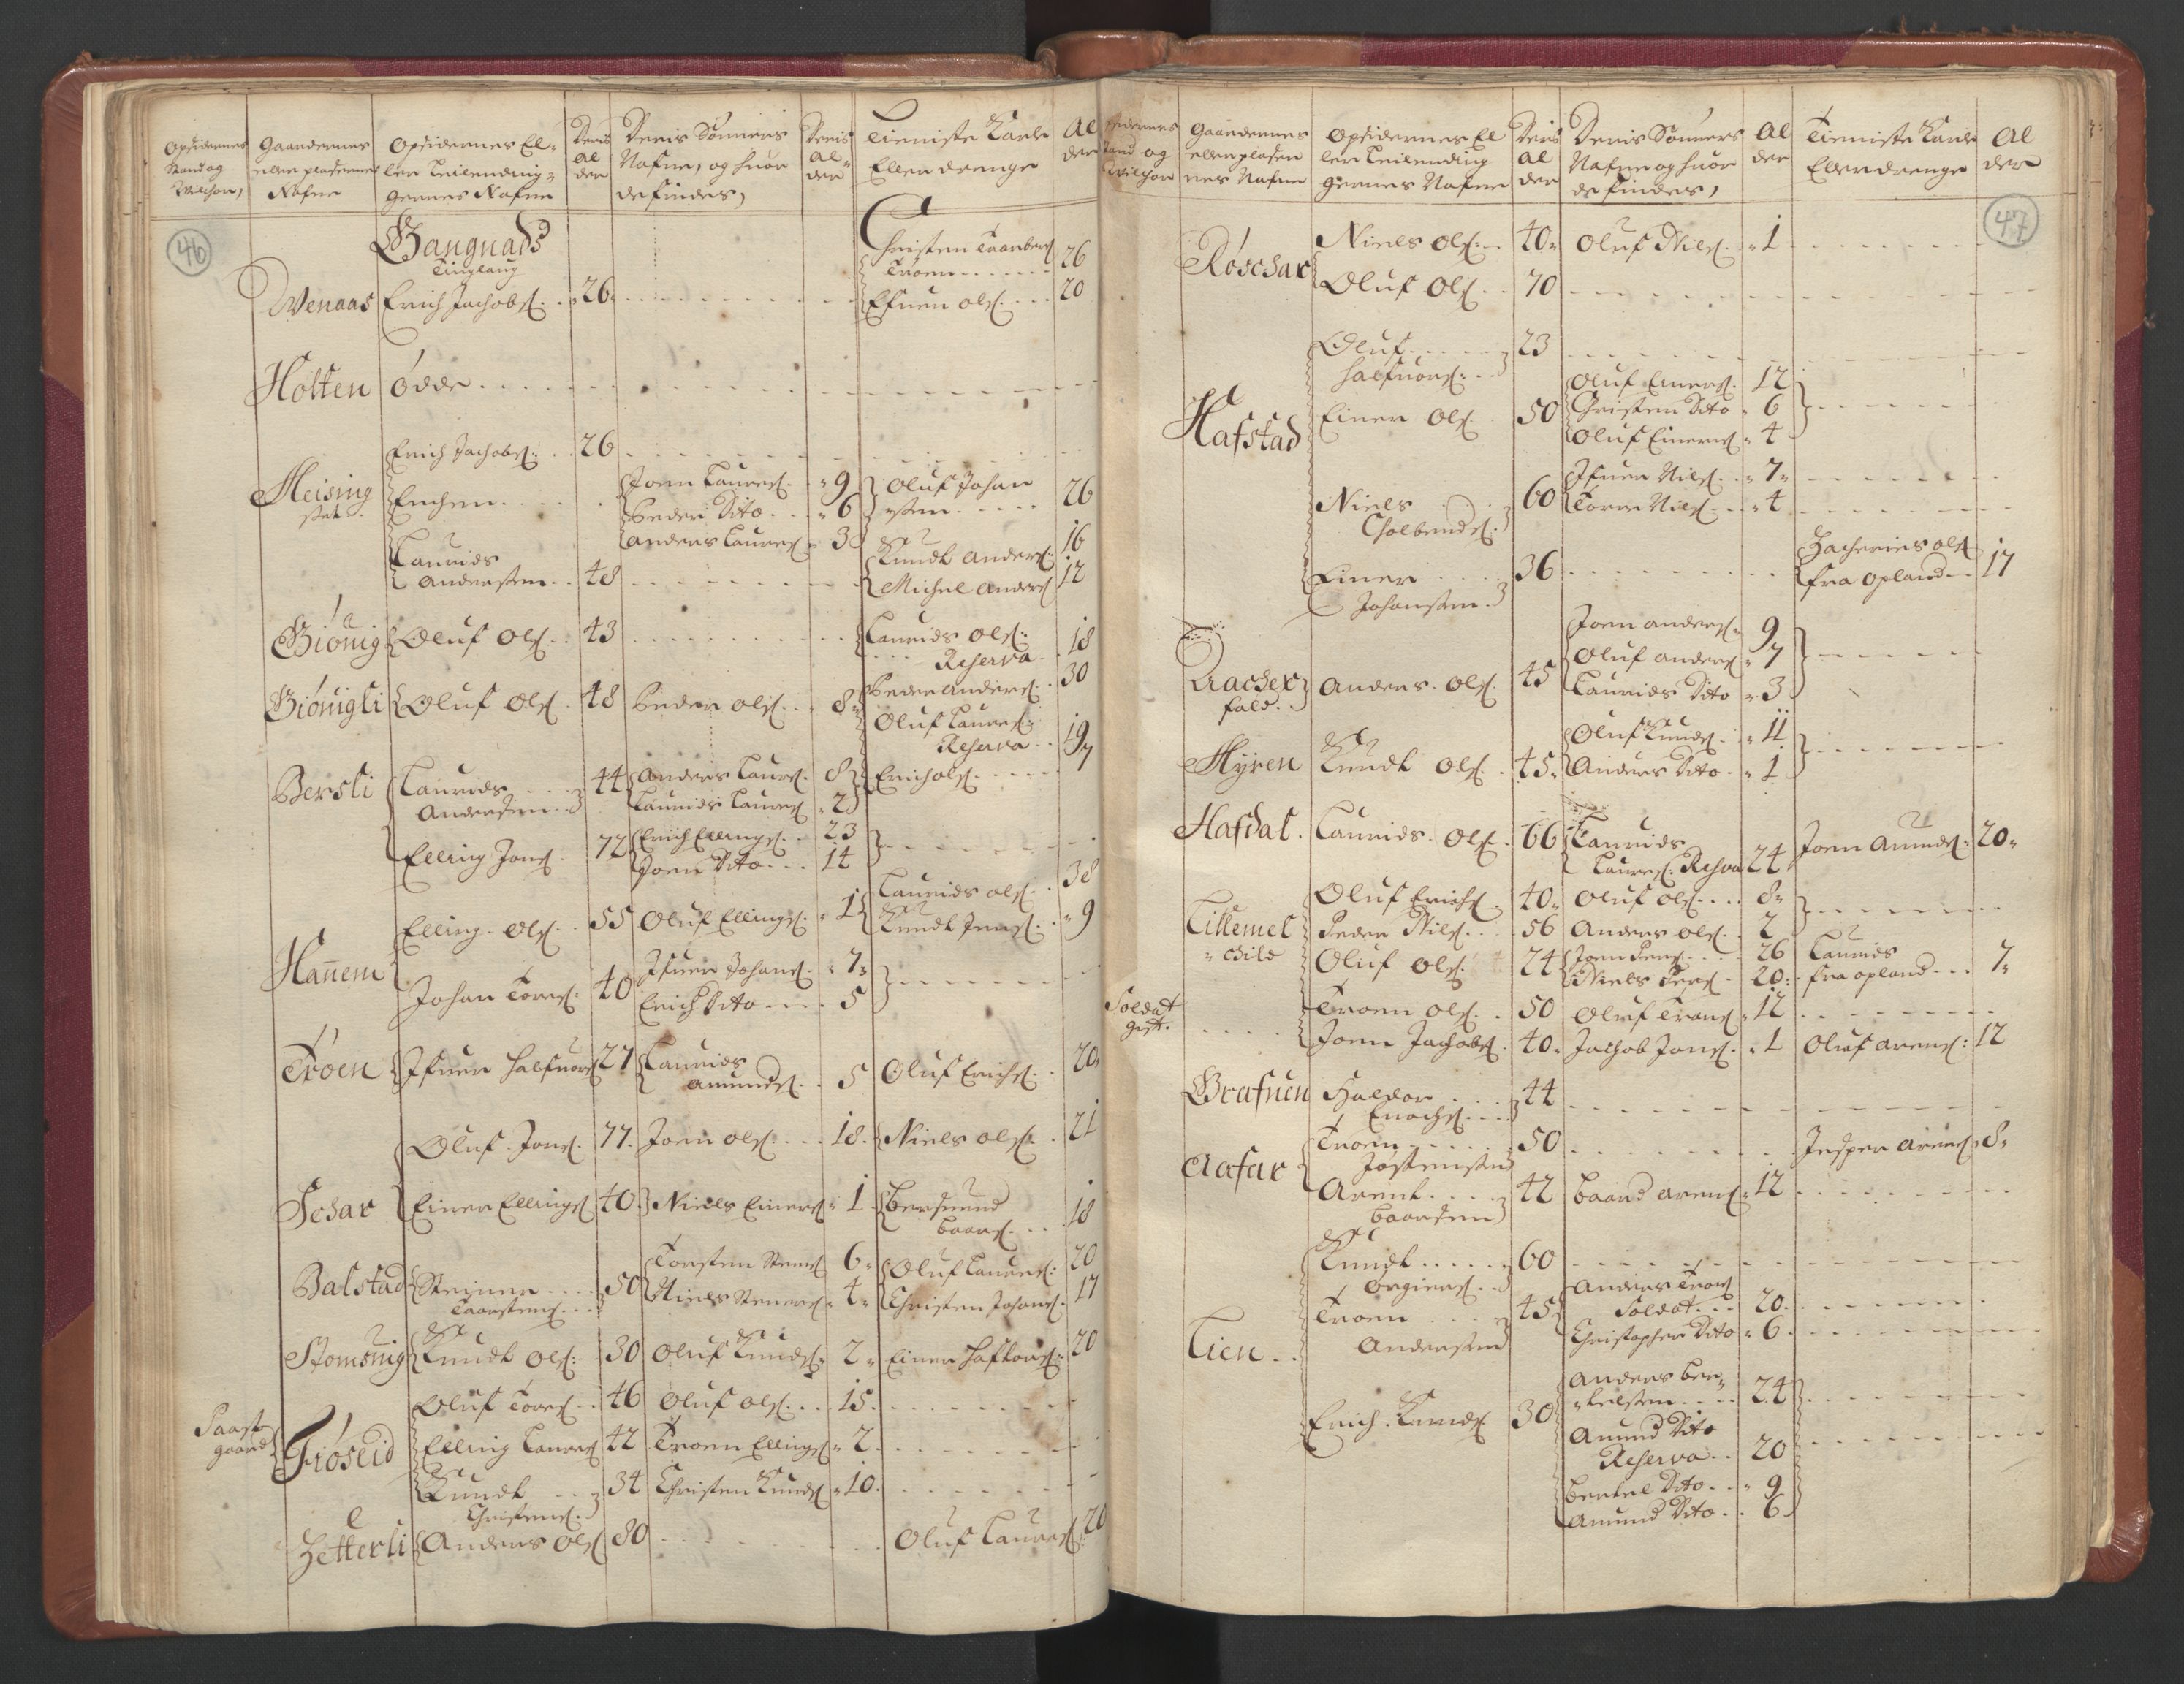 RA, Manntallet 1701, nr. 11: Nordmøre fogderi og Romsdal fogderi, 1701, s. 46-47